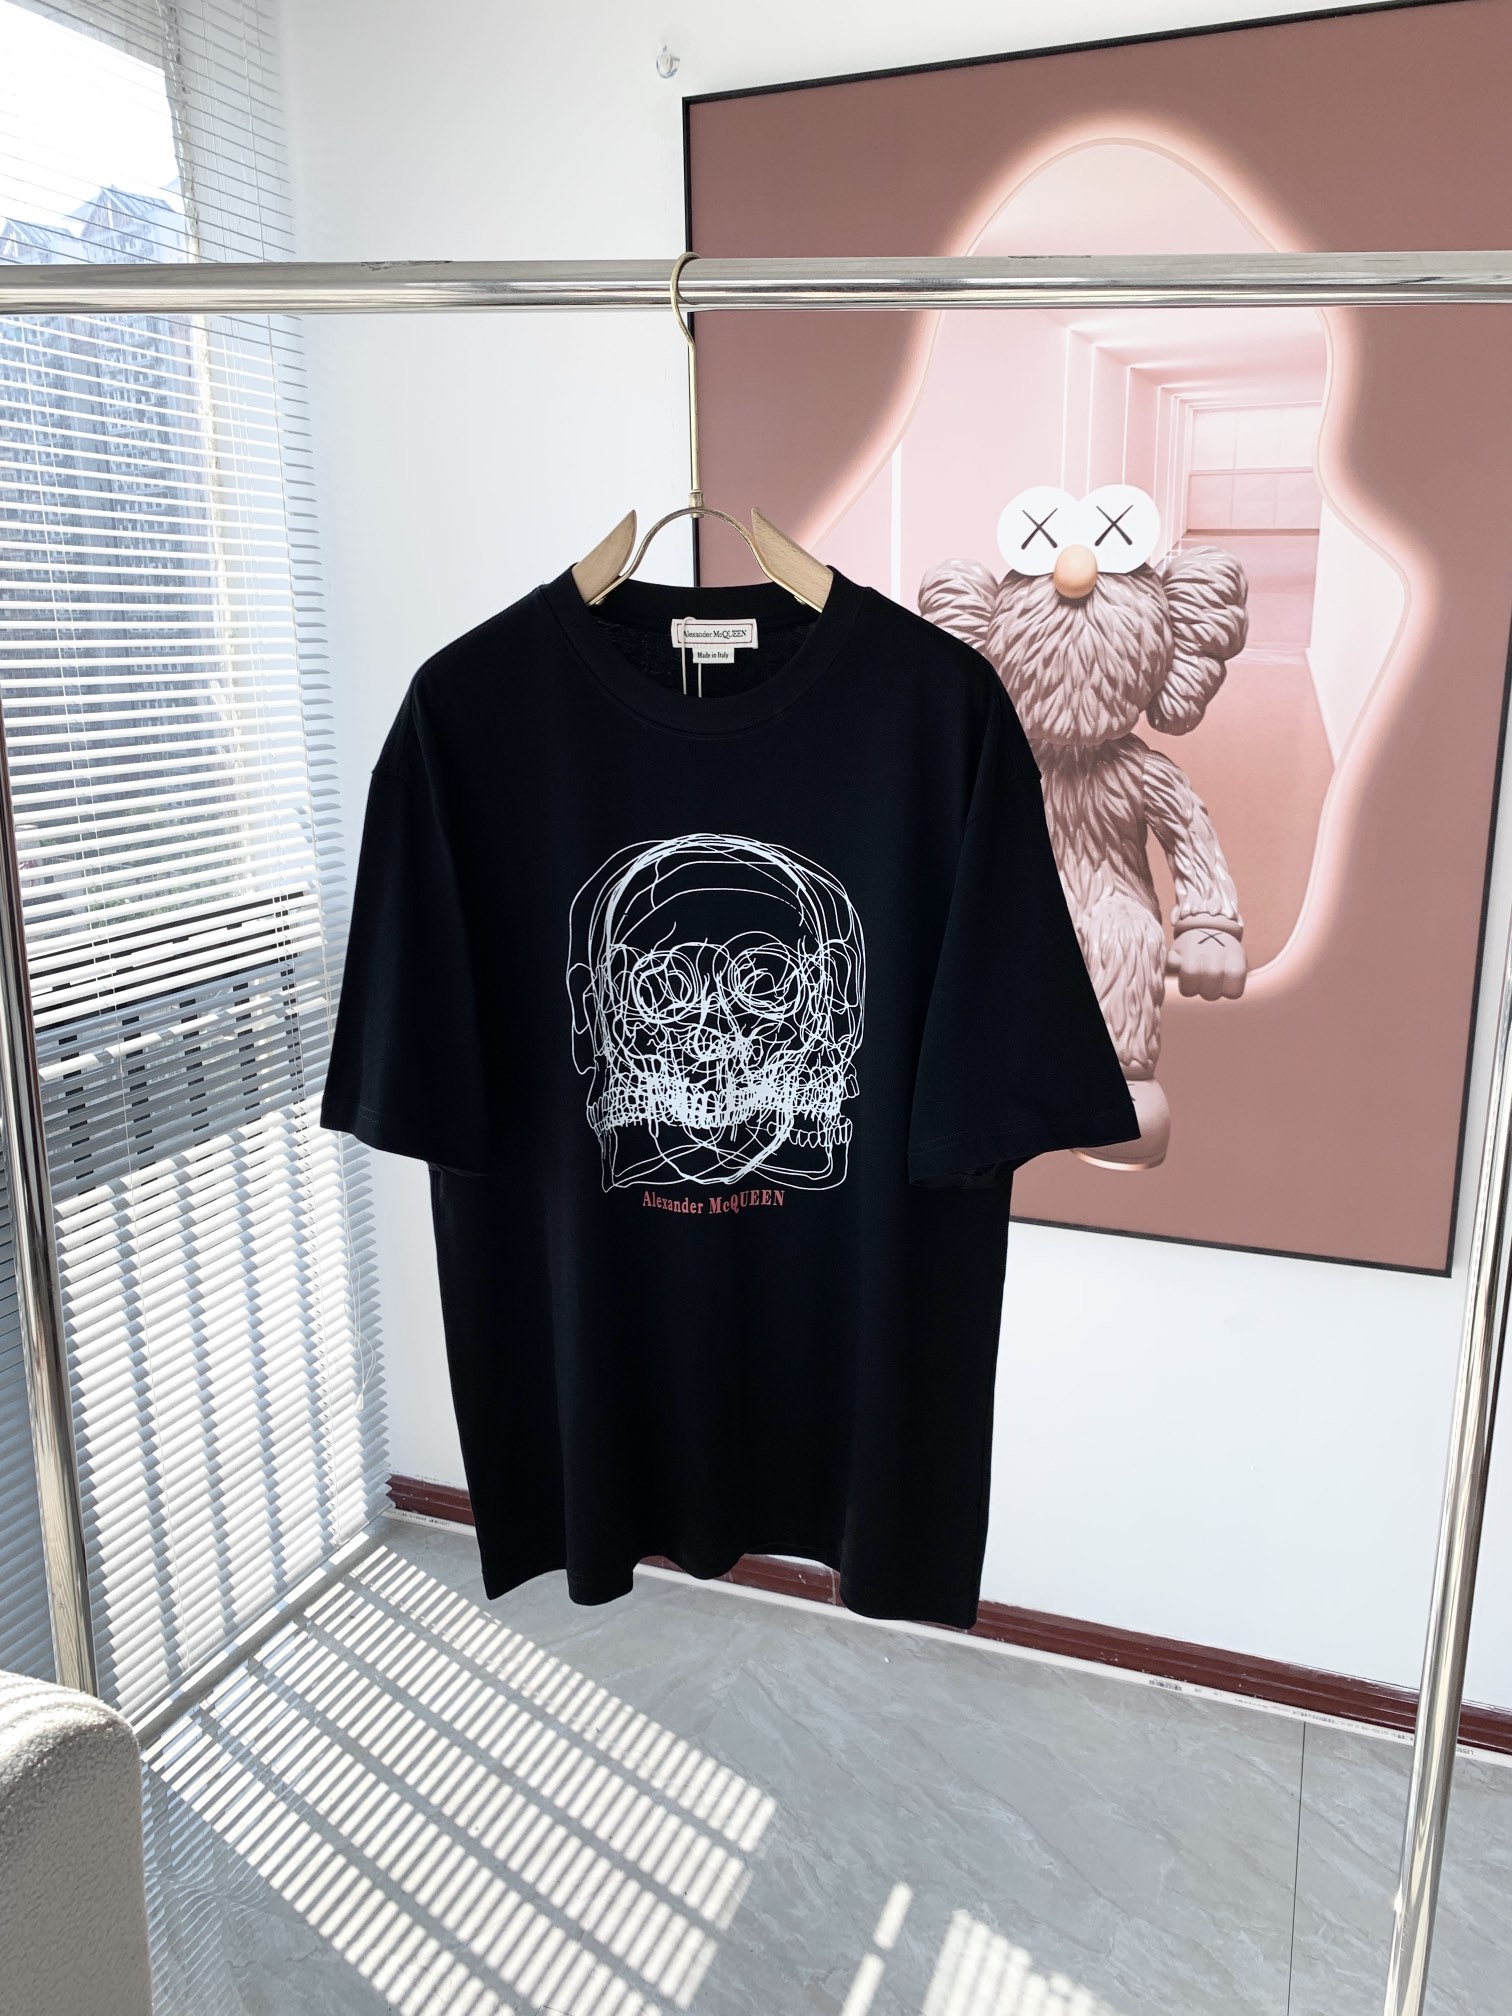 Alexander McQueen Clothing T-Shirt Unisex Cotton Spring/Summer Collection Short Sleeve